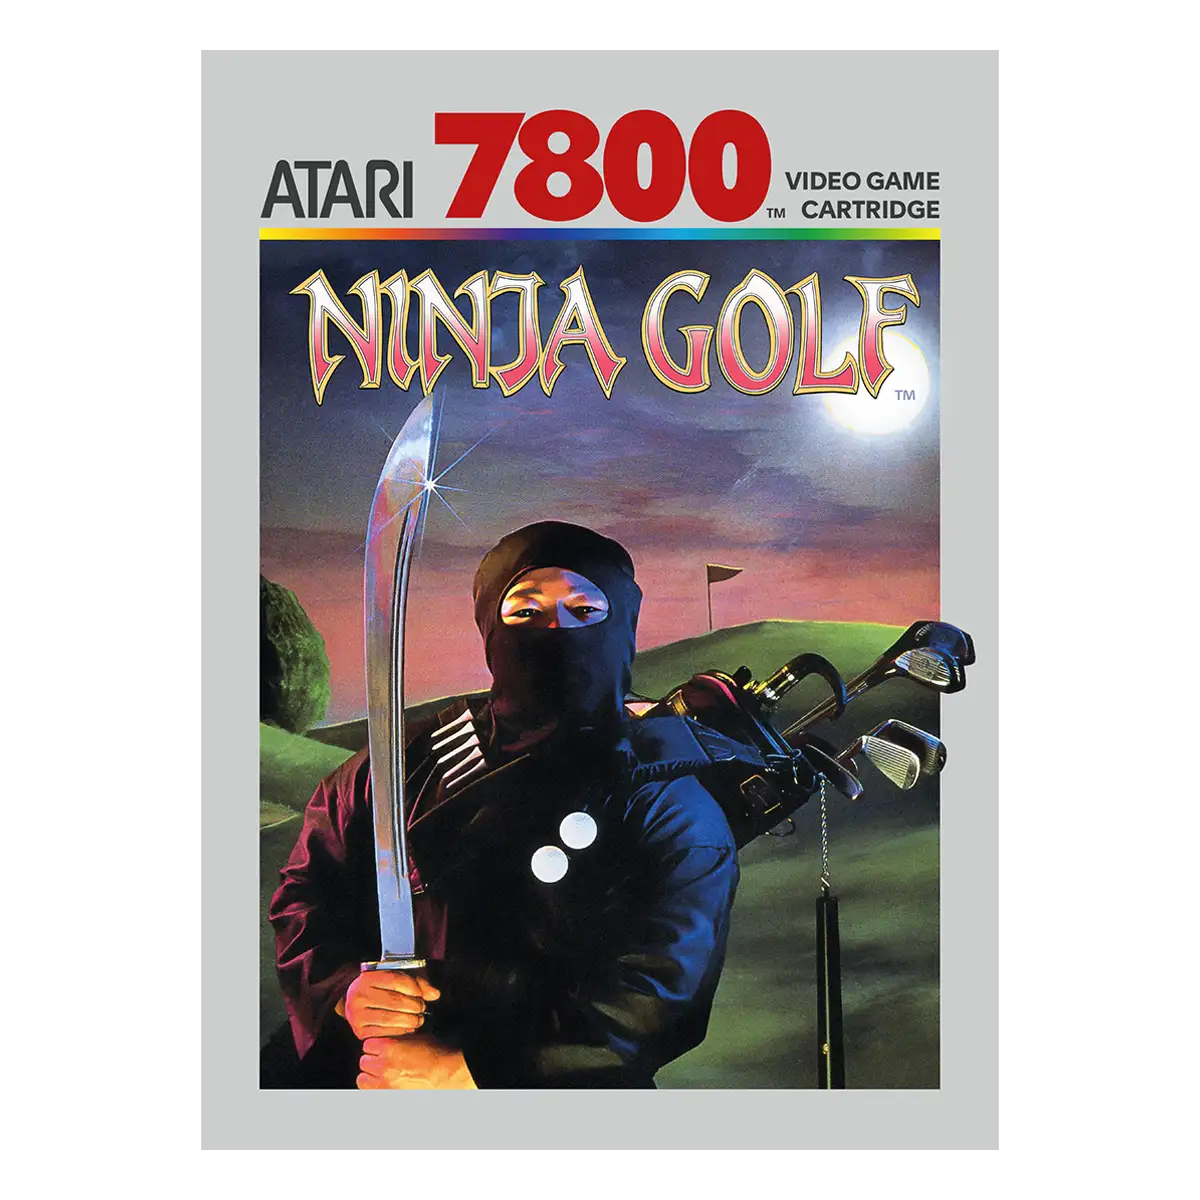 Ninja Golf 7800 Image 2